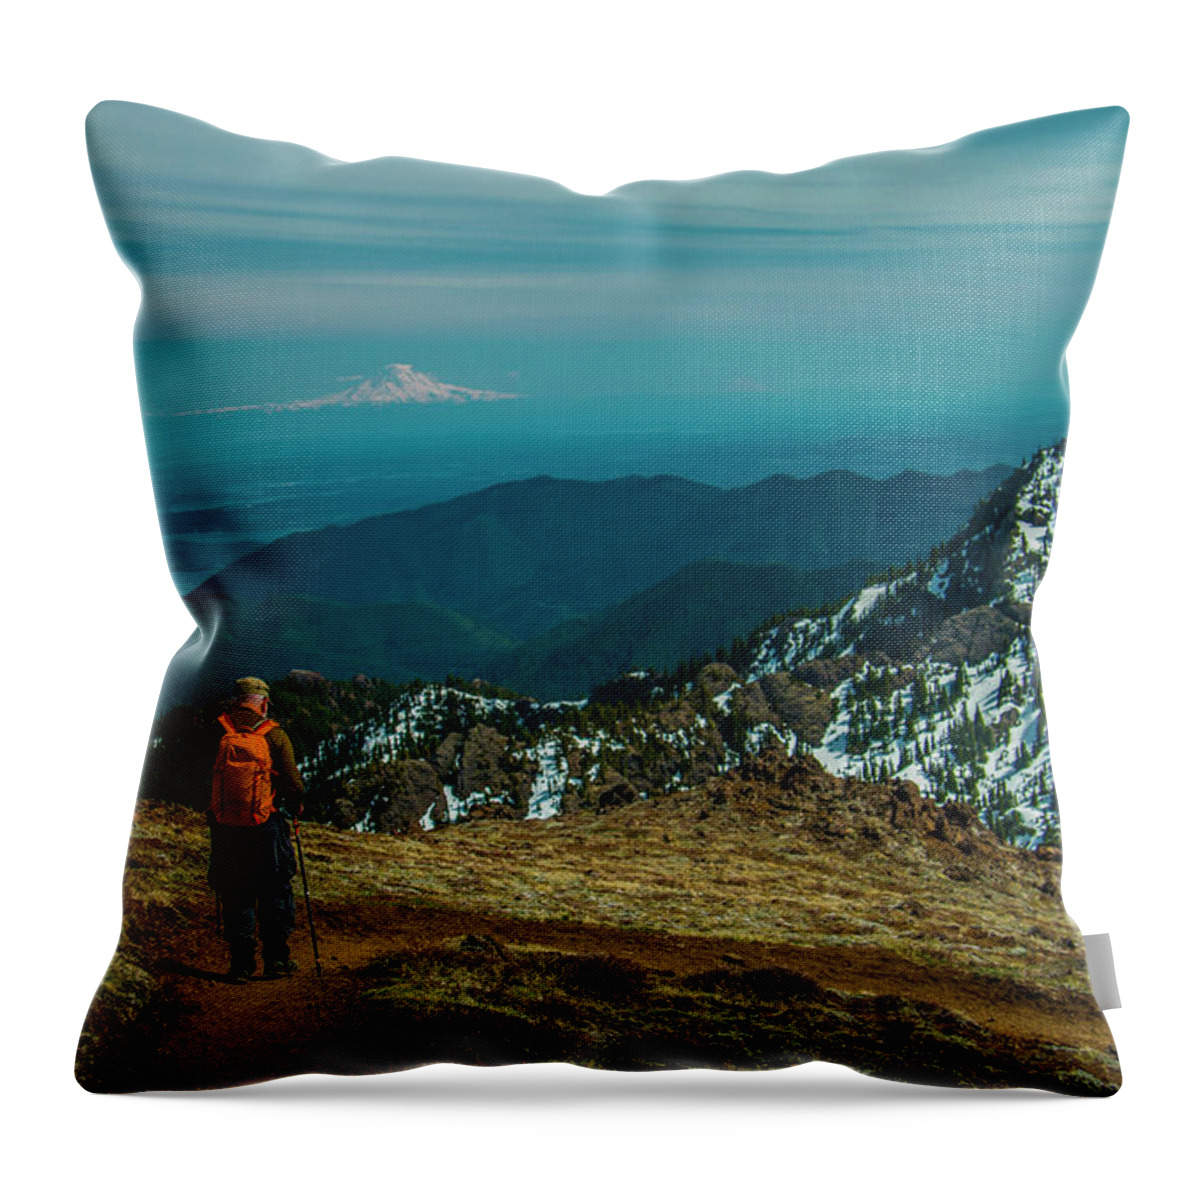 Landscape Throw Pillow featuring the photograph Decending by Doug Scrima